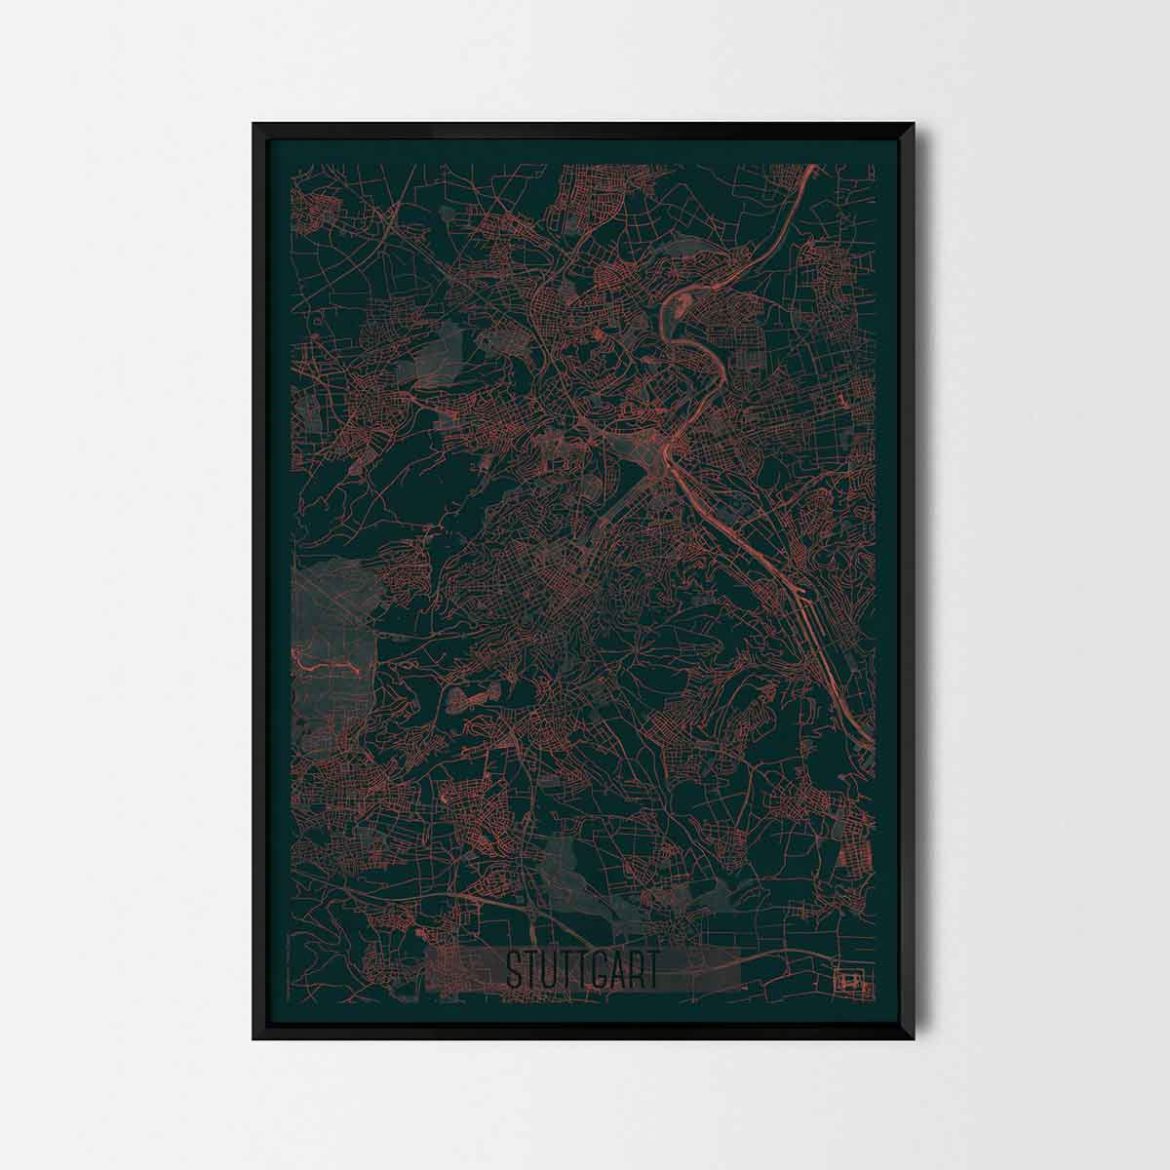 Textured Paper - Stuttgart, Germany Original Map Design Blue Stroke - Art  Print Poster Photo Gift - Size: 24 x 16 Inches